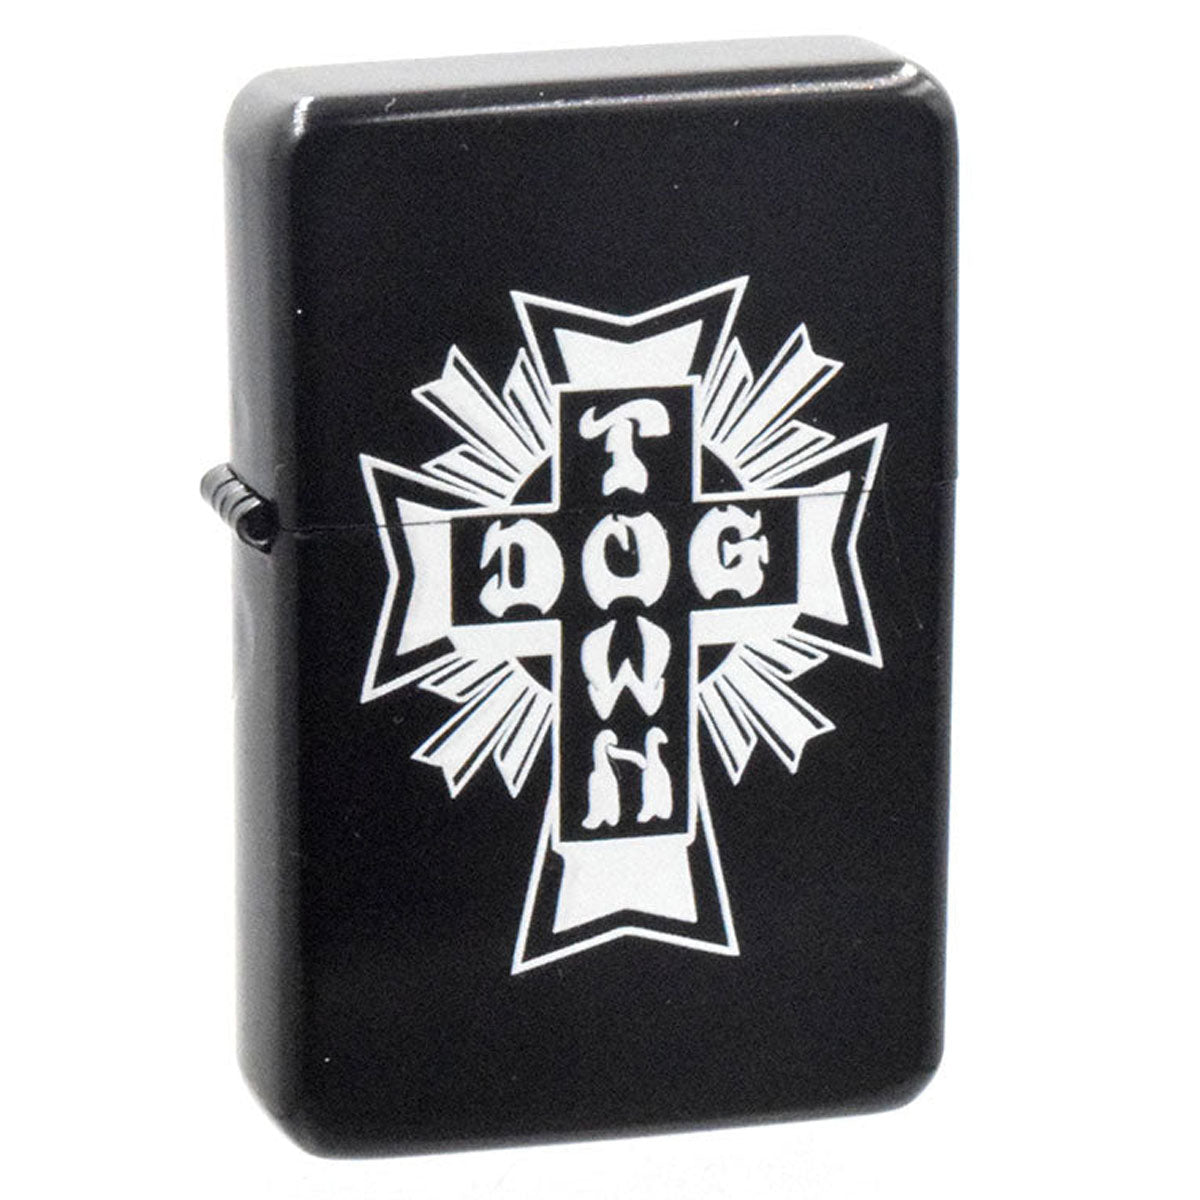 Dogtown Cross Logo Flip Top Metal Lighter - Black/White image 1